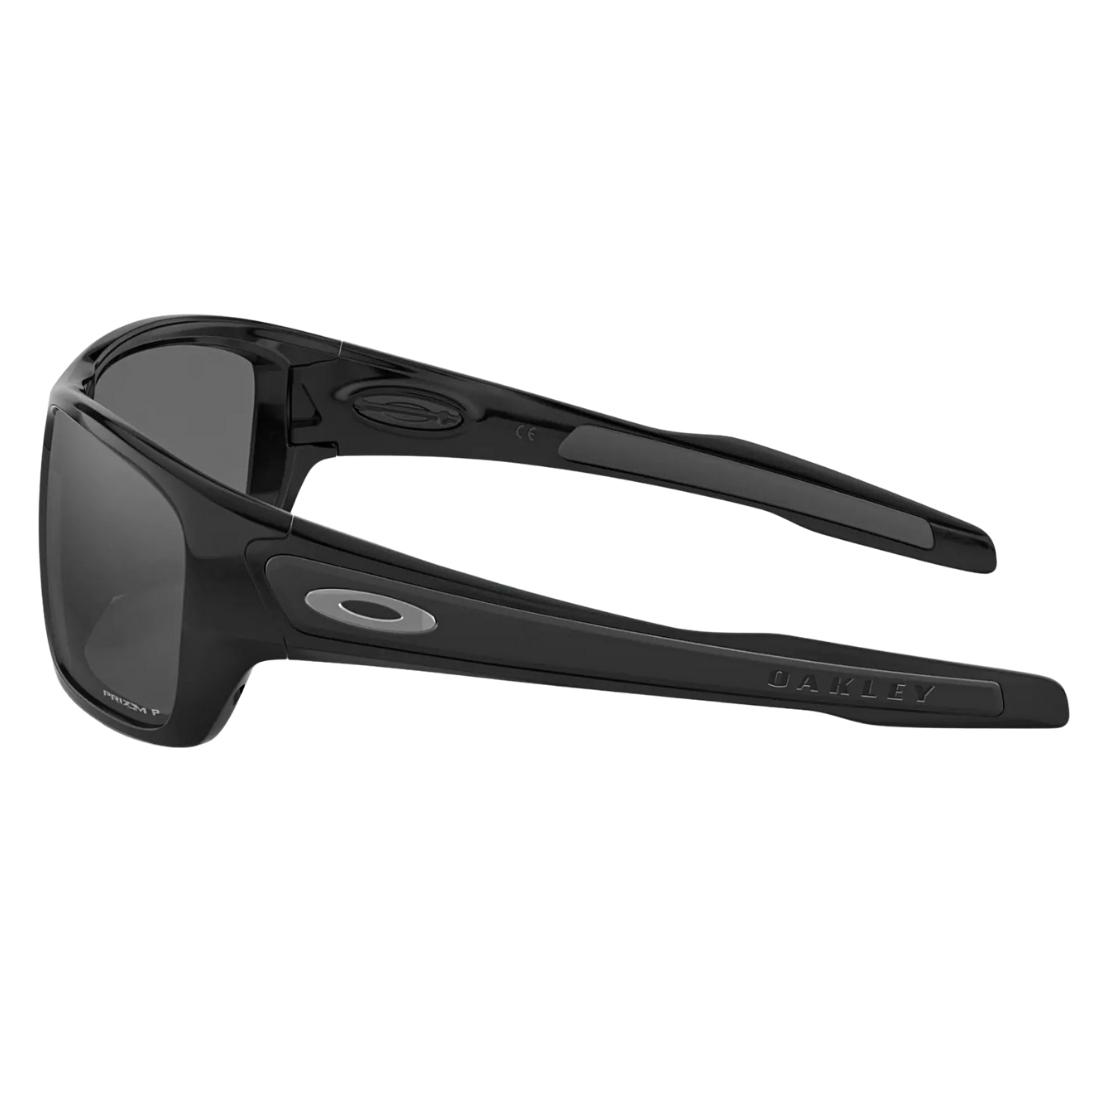 Oakley Turbine Sunglasses - Polished Black/Prizm Black Polarized - Square/Rectangular Sunglasses by Oakley